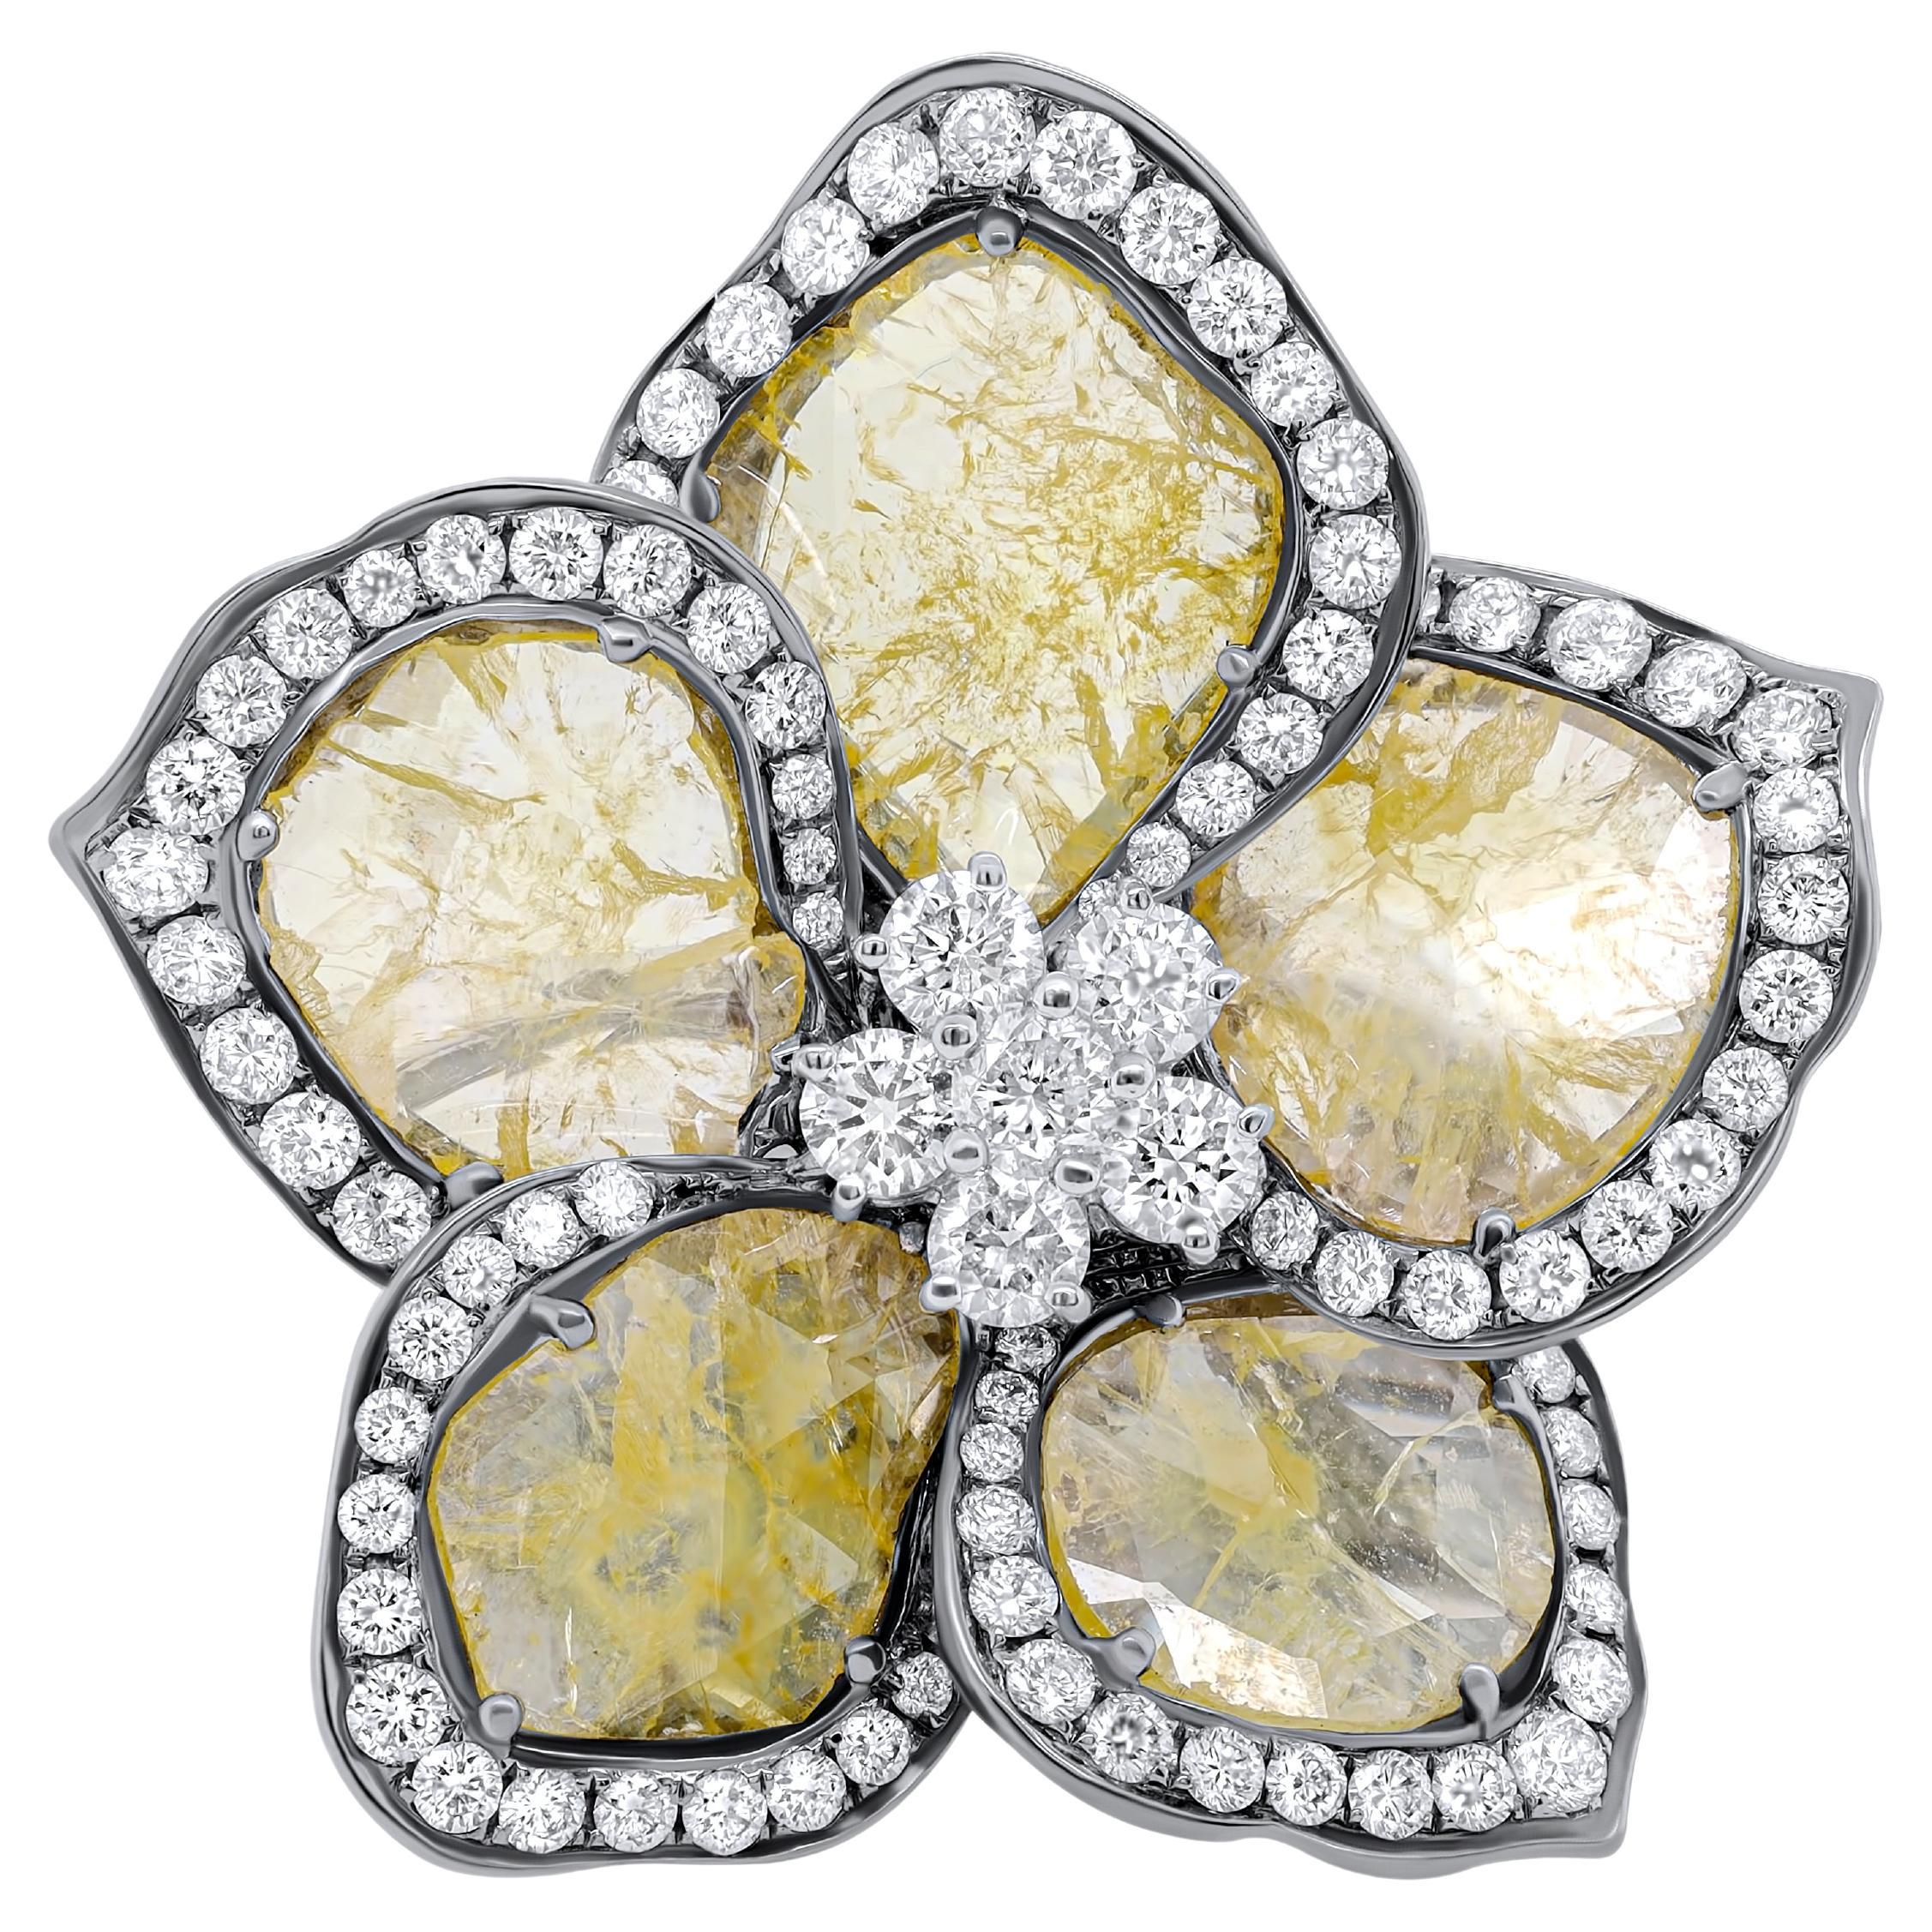 Diana M .18kt wg diamond ring  flower design with 6.53cts yellow sliced diamonds